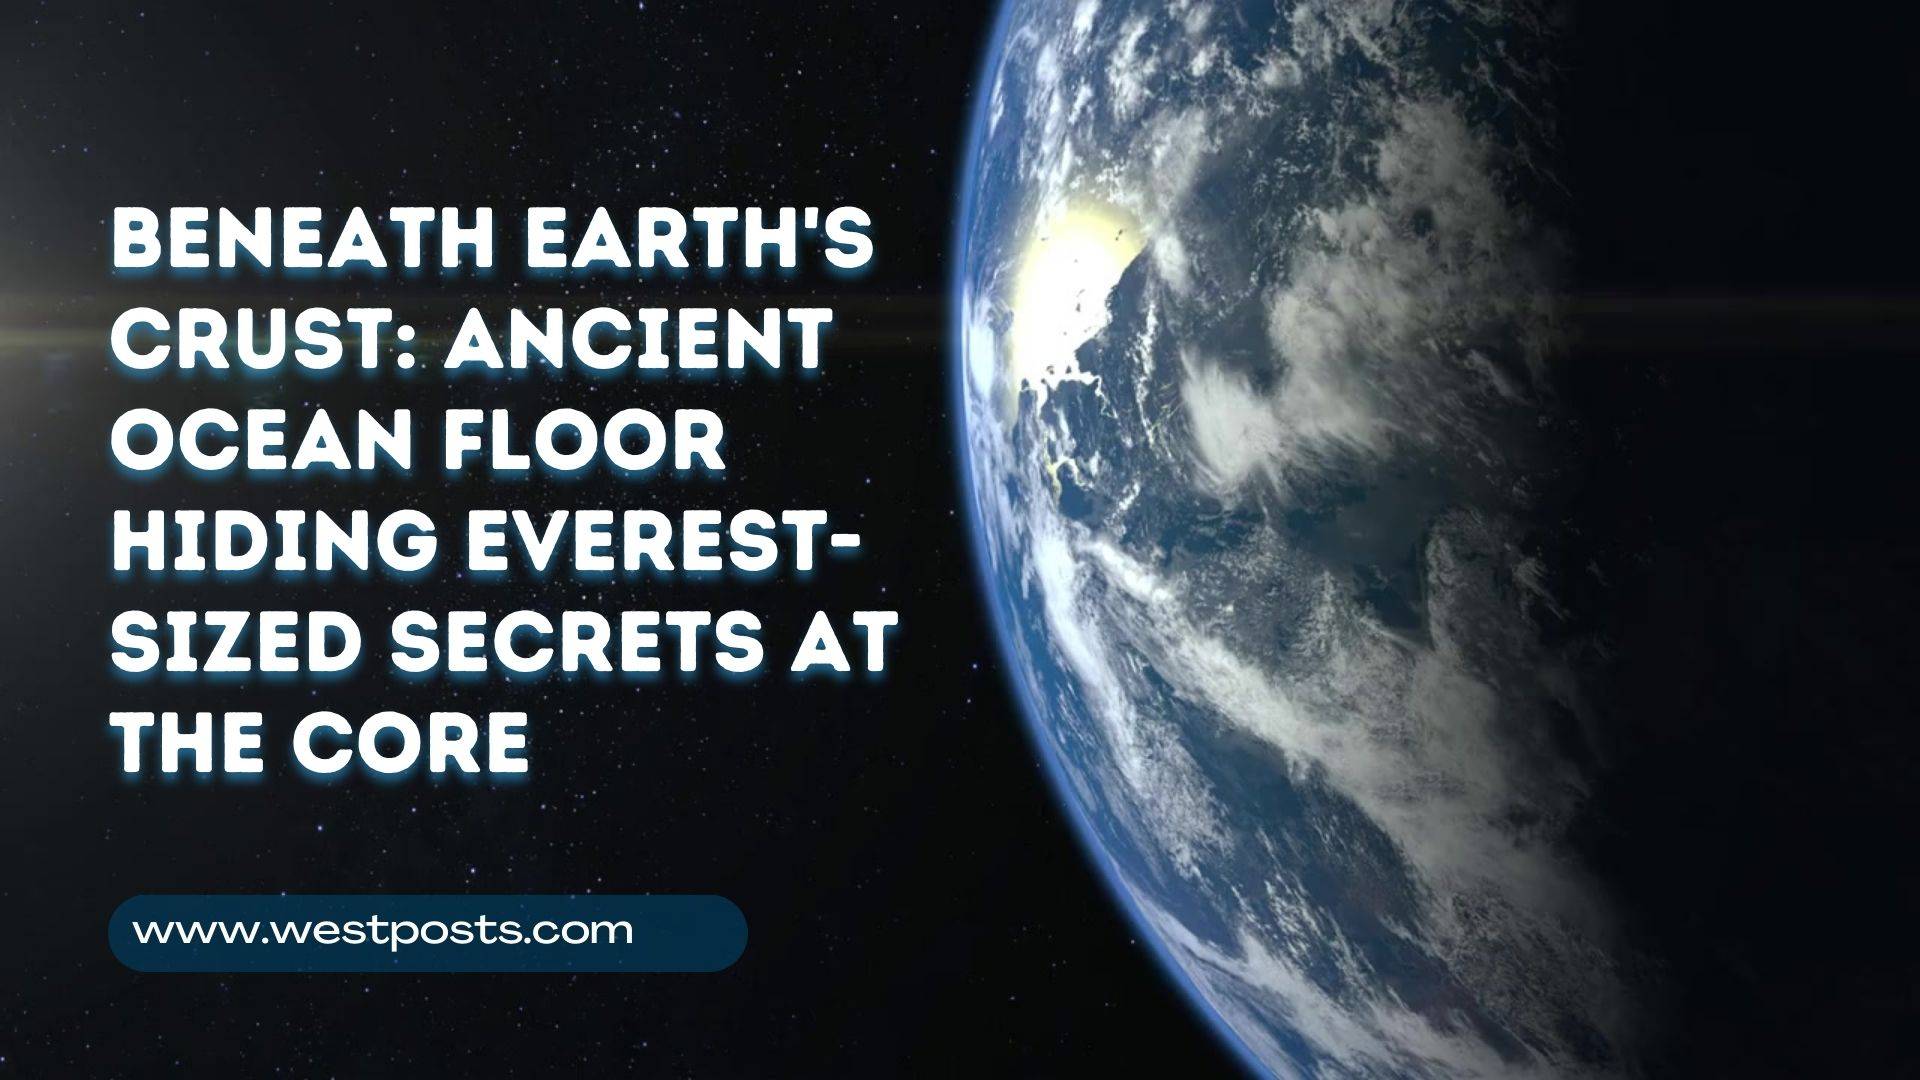 Beneath Earth’s Crust: Ancient Ocean Floor Hiding Everest-Sized Secrets at The Core